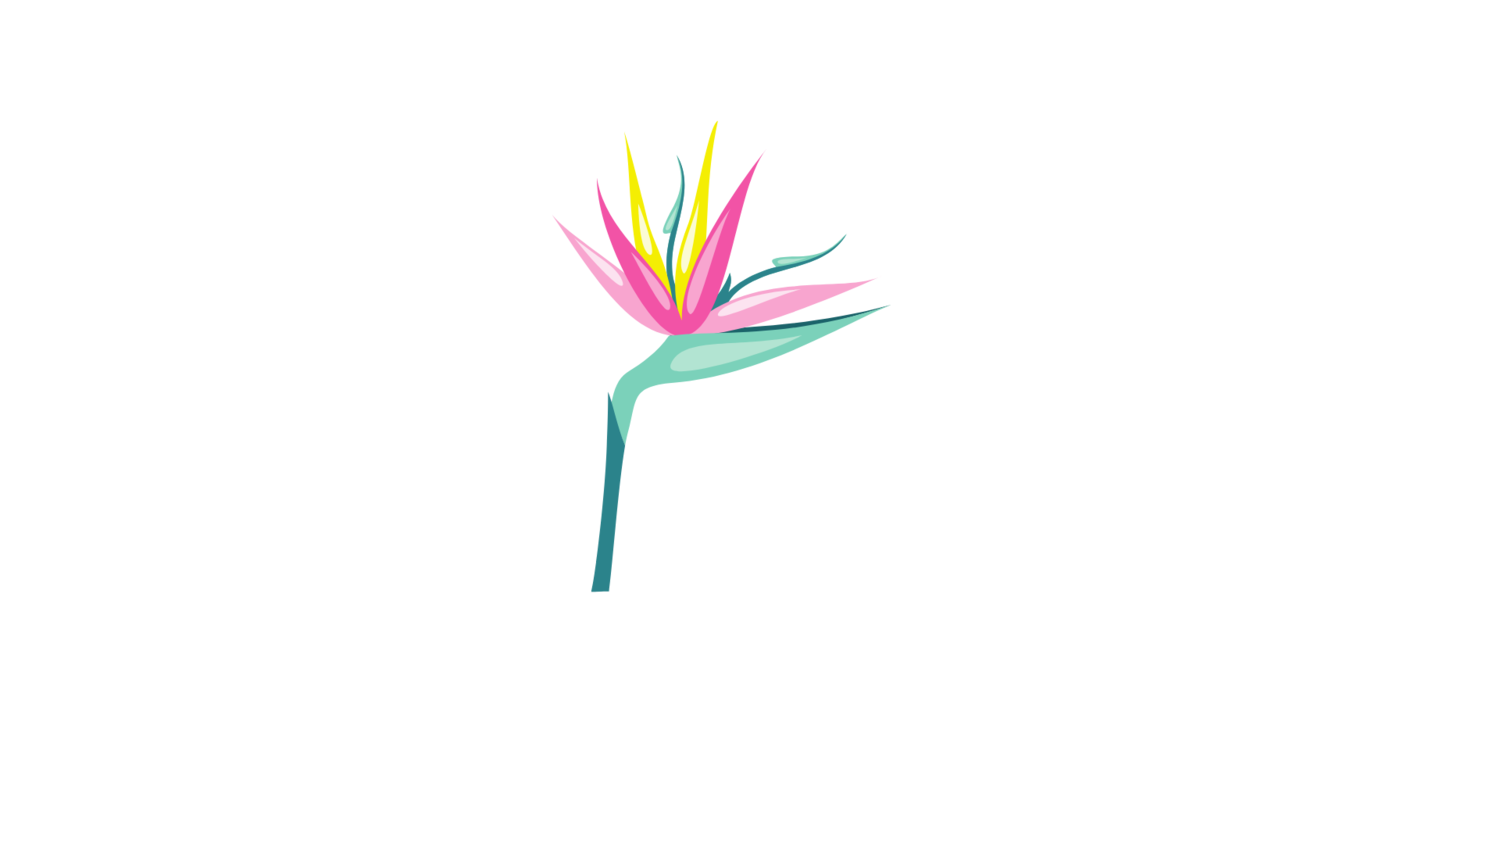 Lea Barnard Wellness